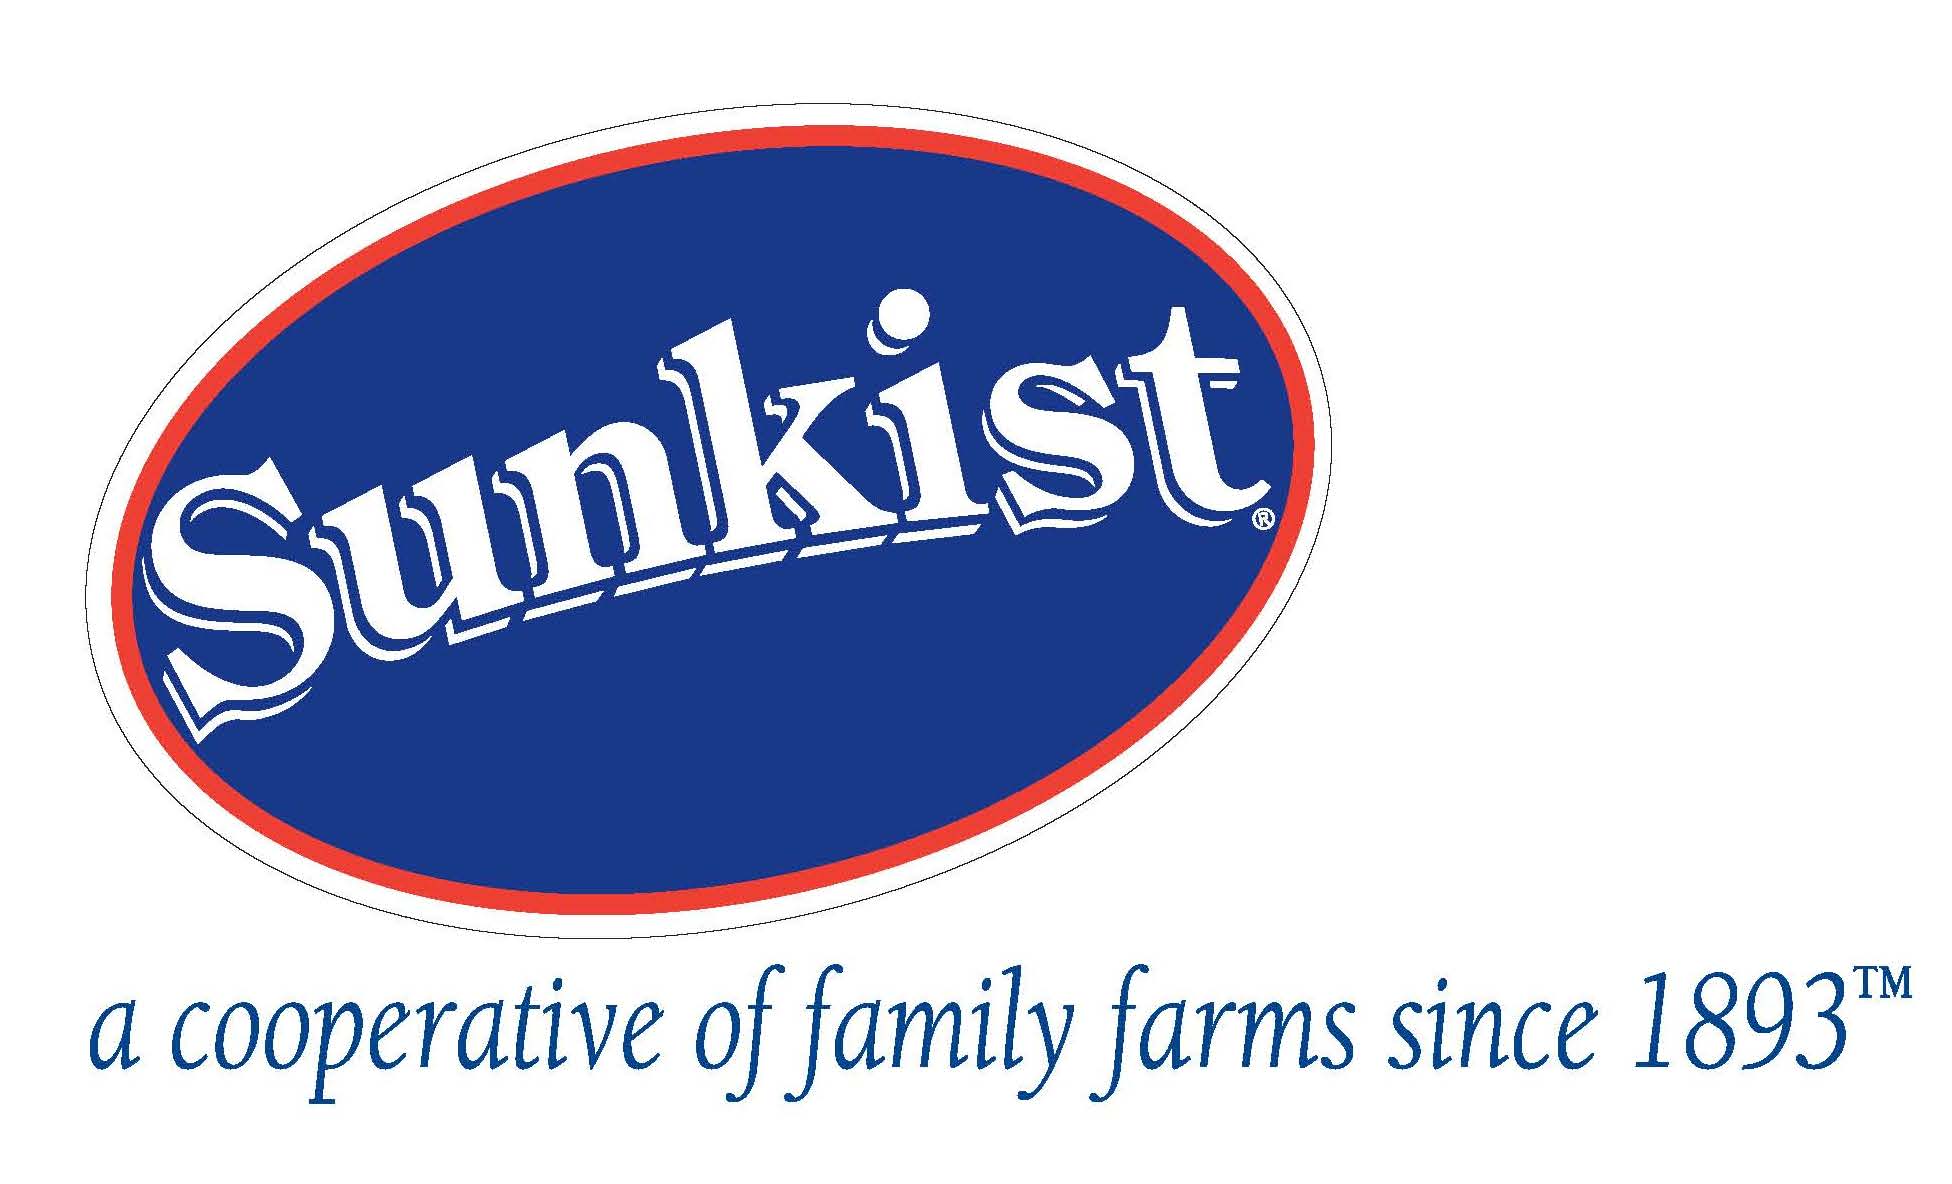 New Sunkist Logo - Sunkist logo 2011. Agricultural Council of California